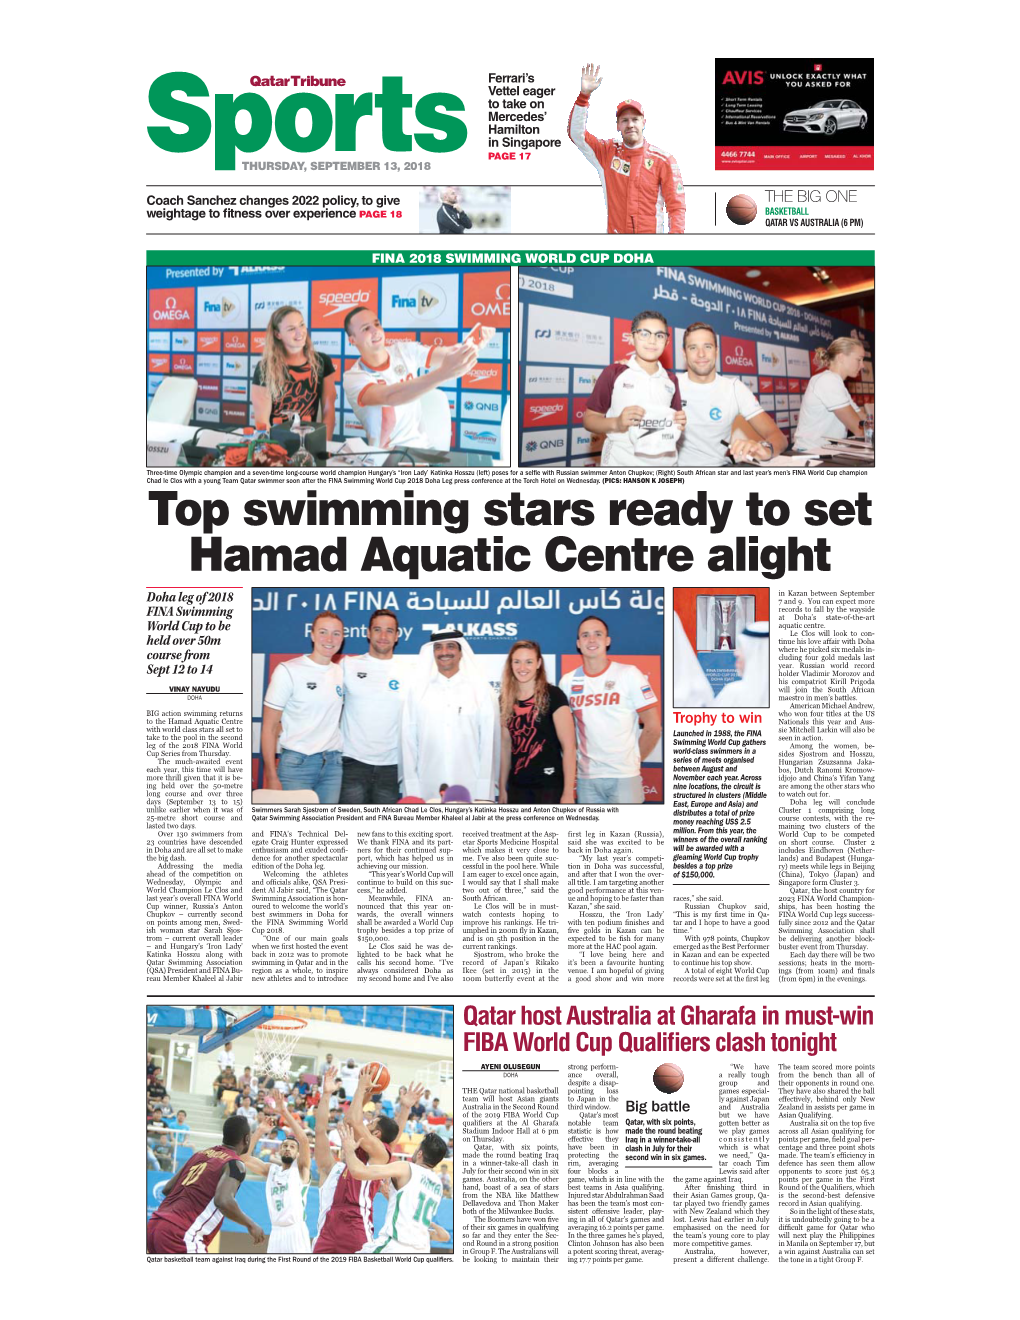 Top Swimming Stars Ready to Set Hamad Aquatic Centre Alight